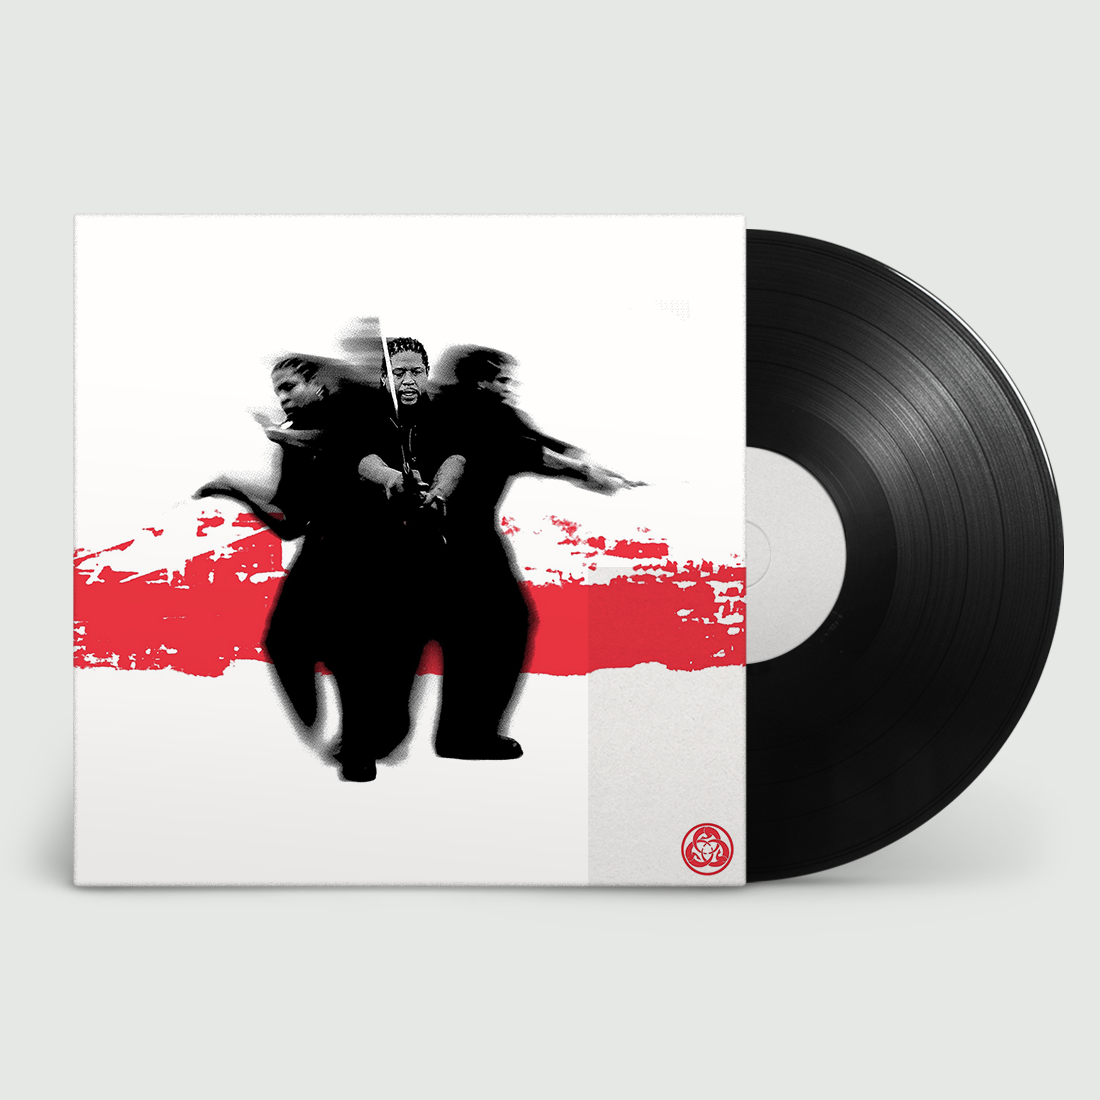 RZA - Ghost Dog - The Way Of The Samurai: Vinyl LP